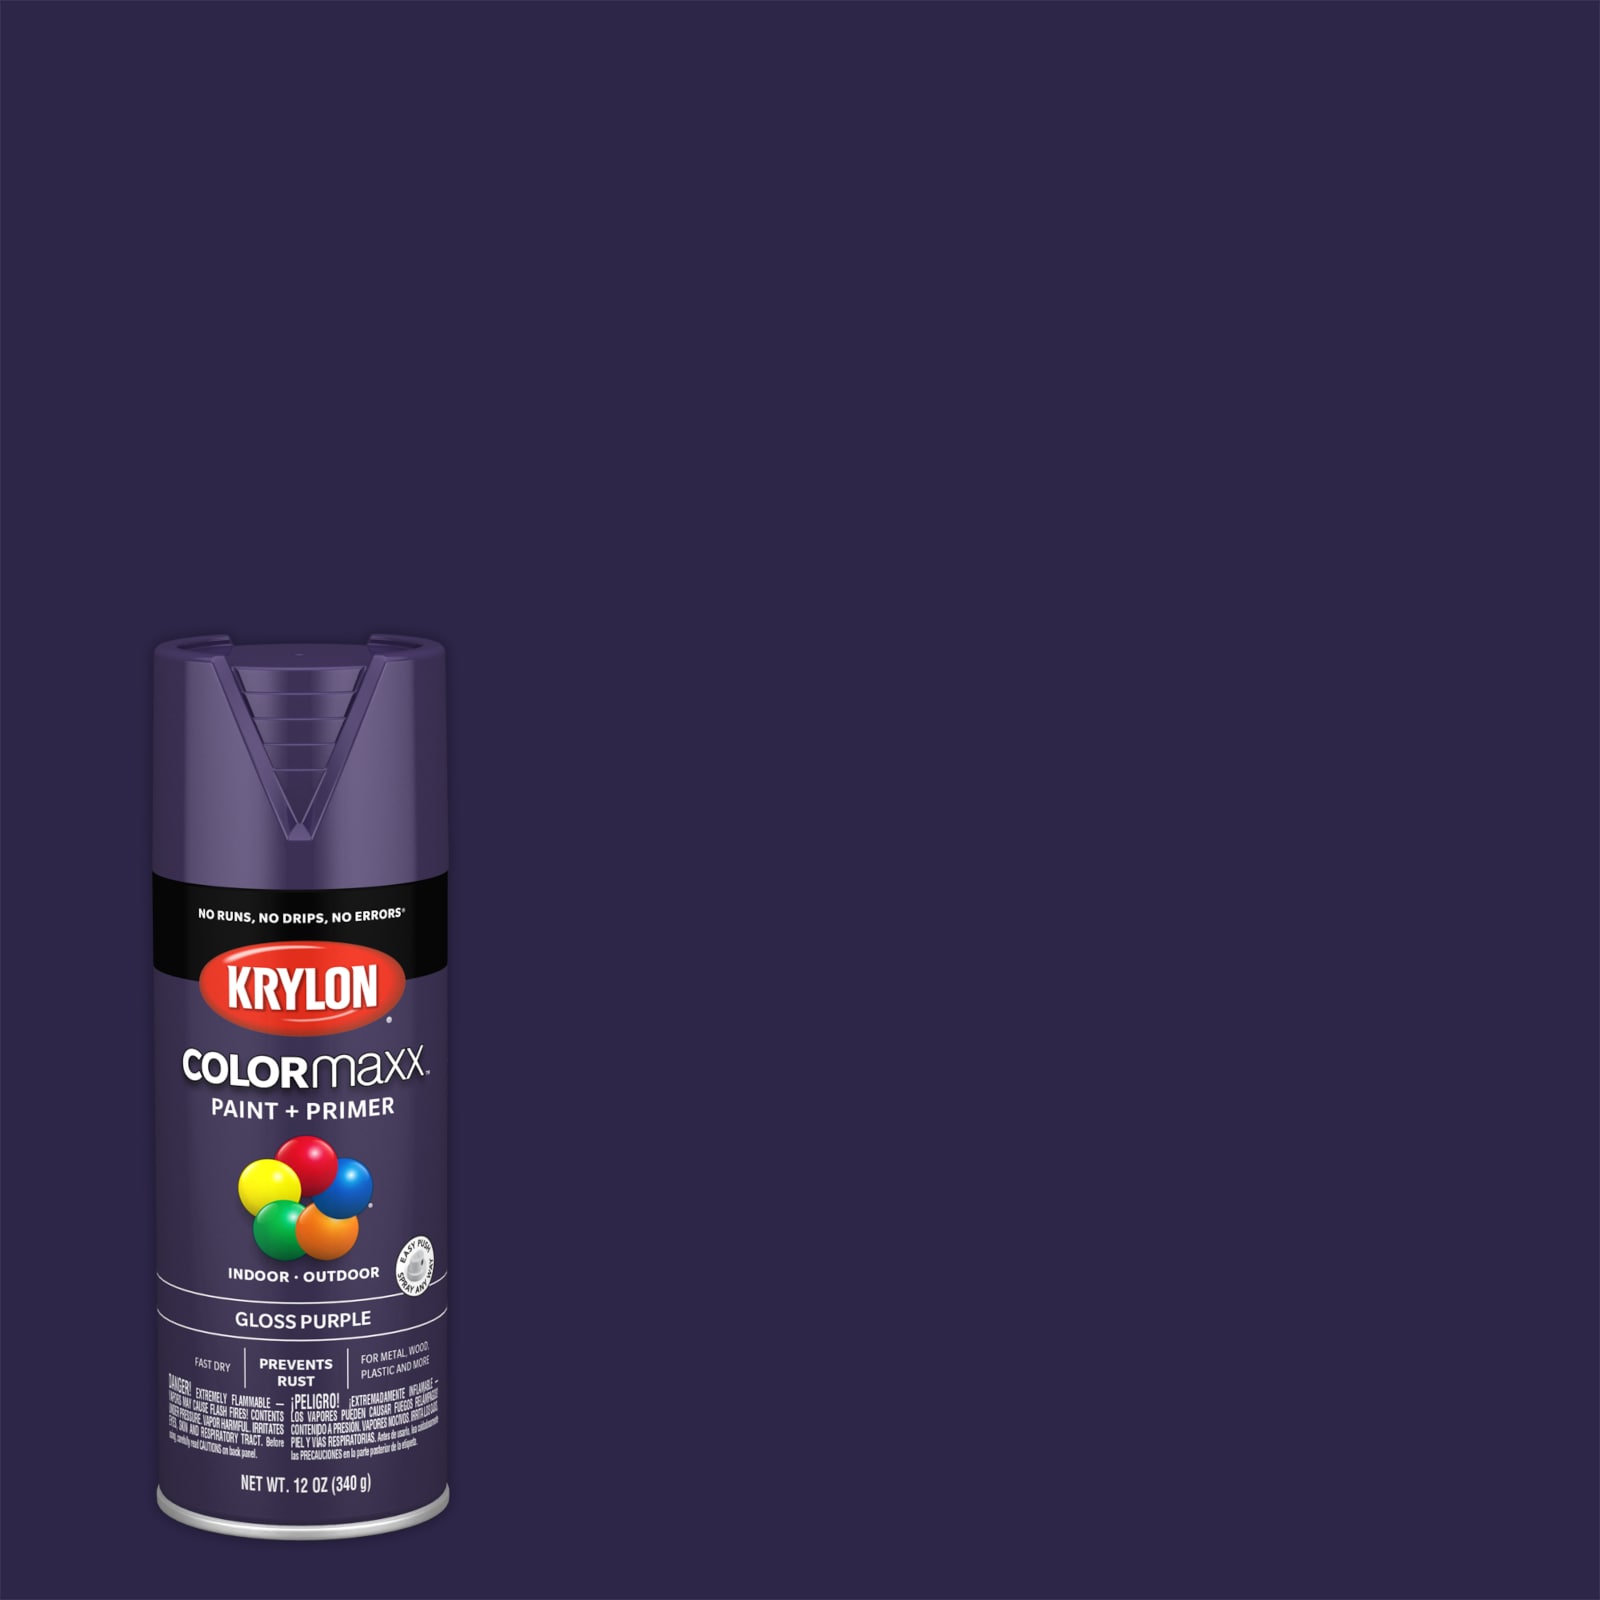 Flat Purple Aerosol Spray Paint